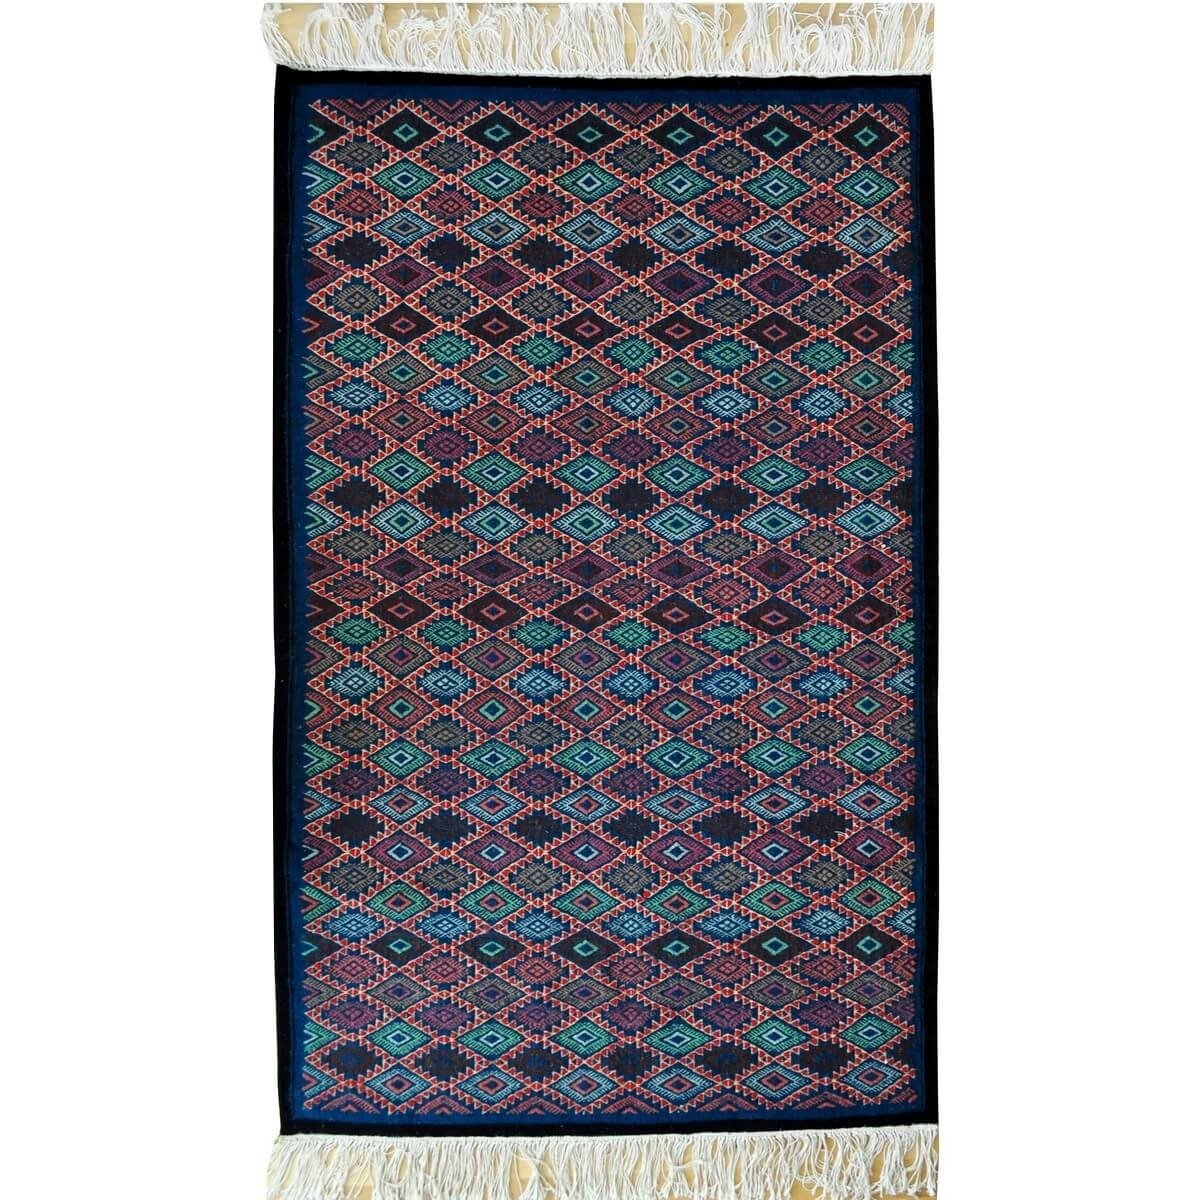 Berber tapijt Tapijt Kilim Nassim 120x195 Blauw/Rood/Groen (Handgeweven, Wol, Tunesië) Tunesisch kilimdeken, Marokkaanse stijl. 